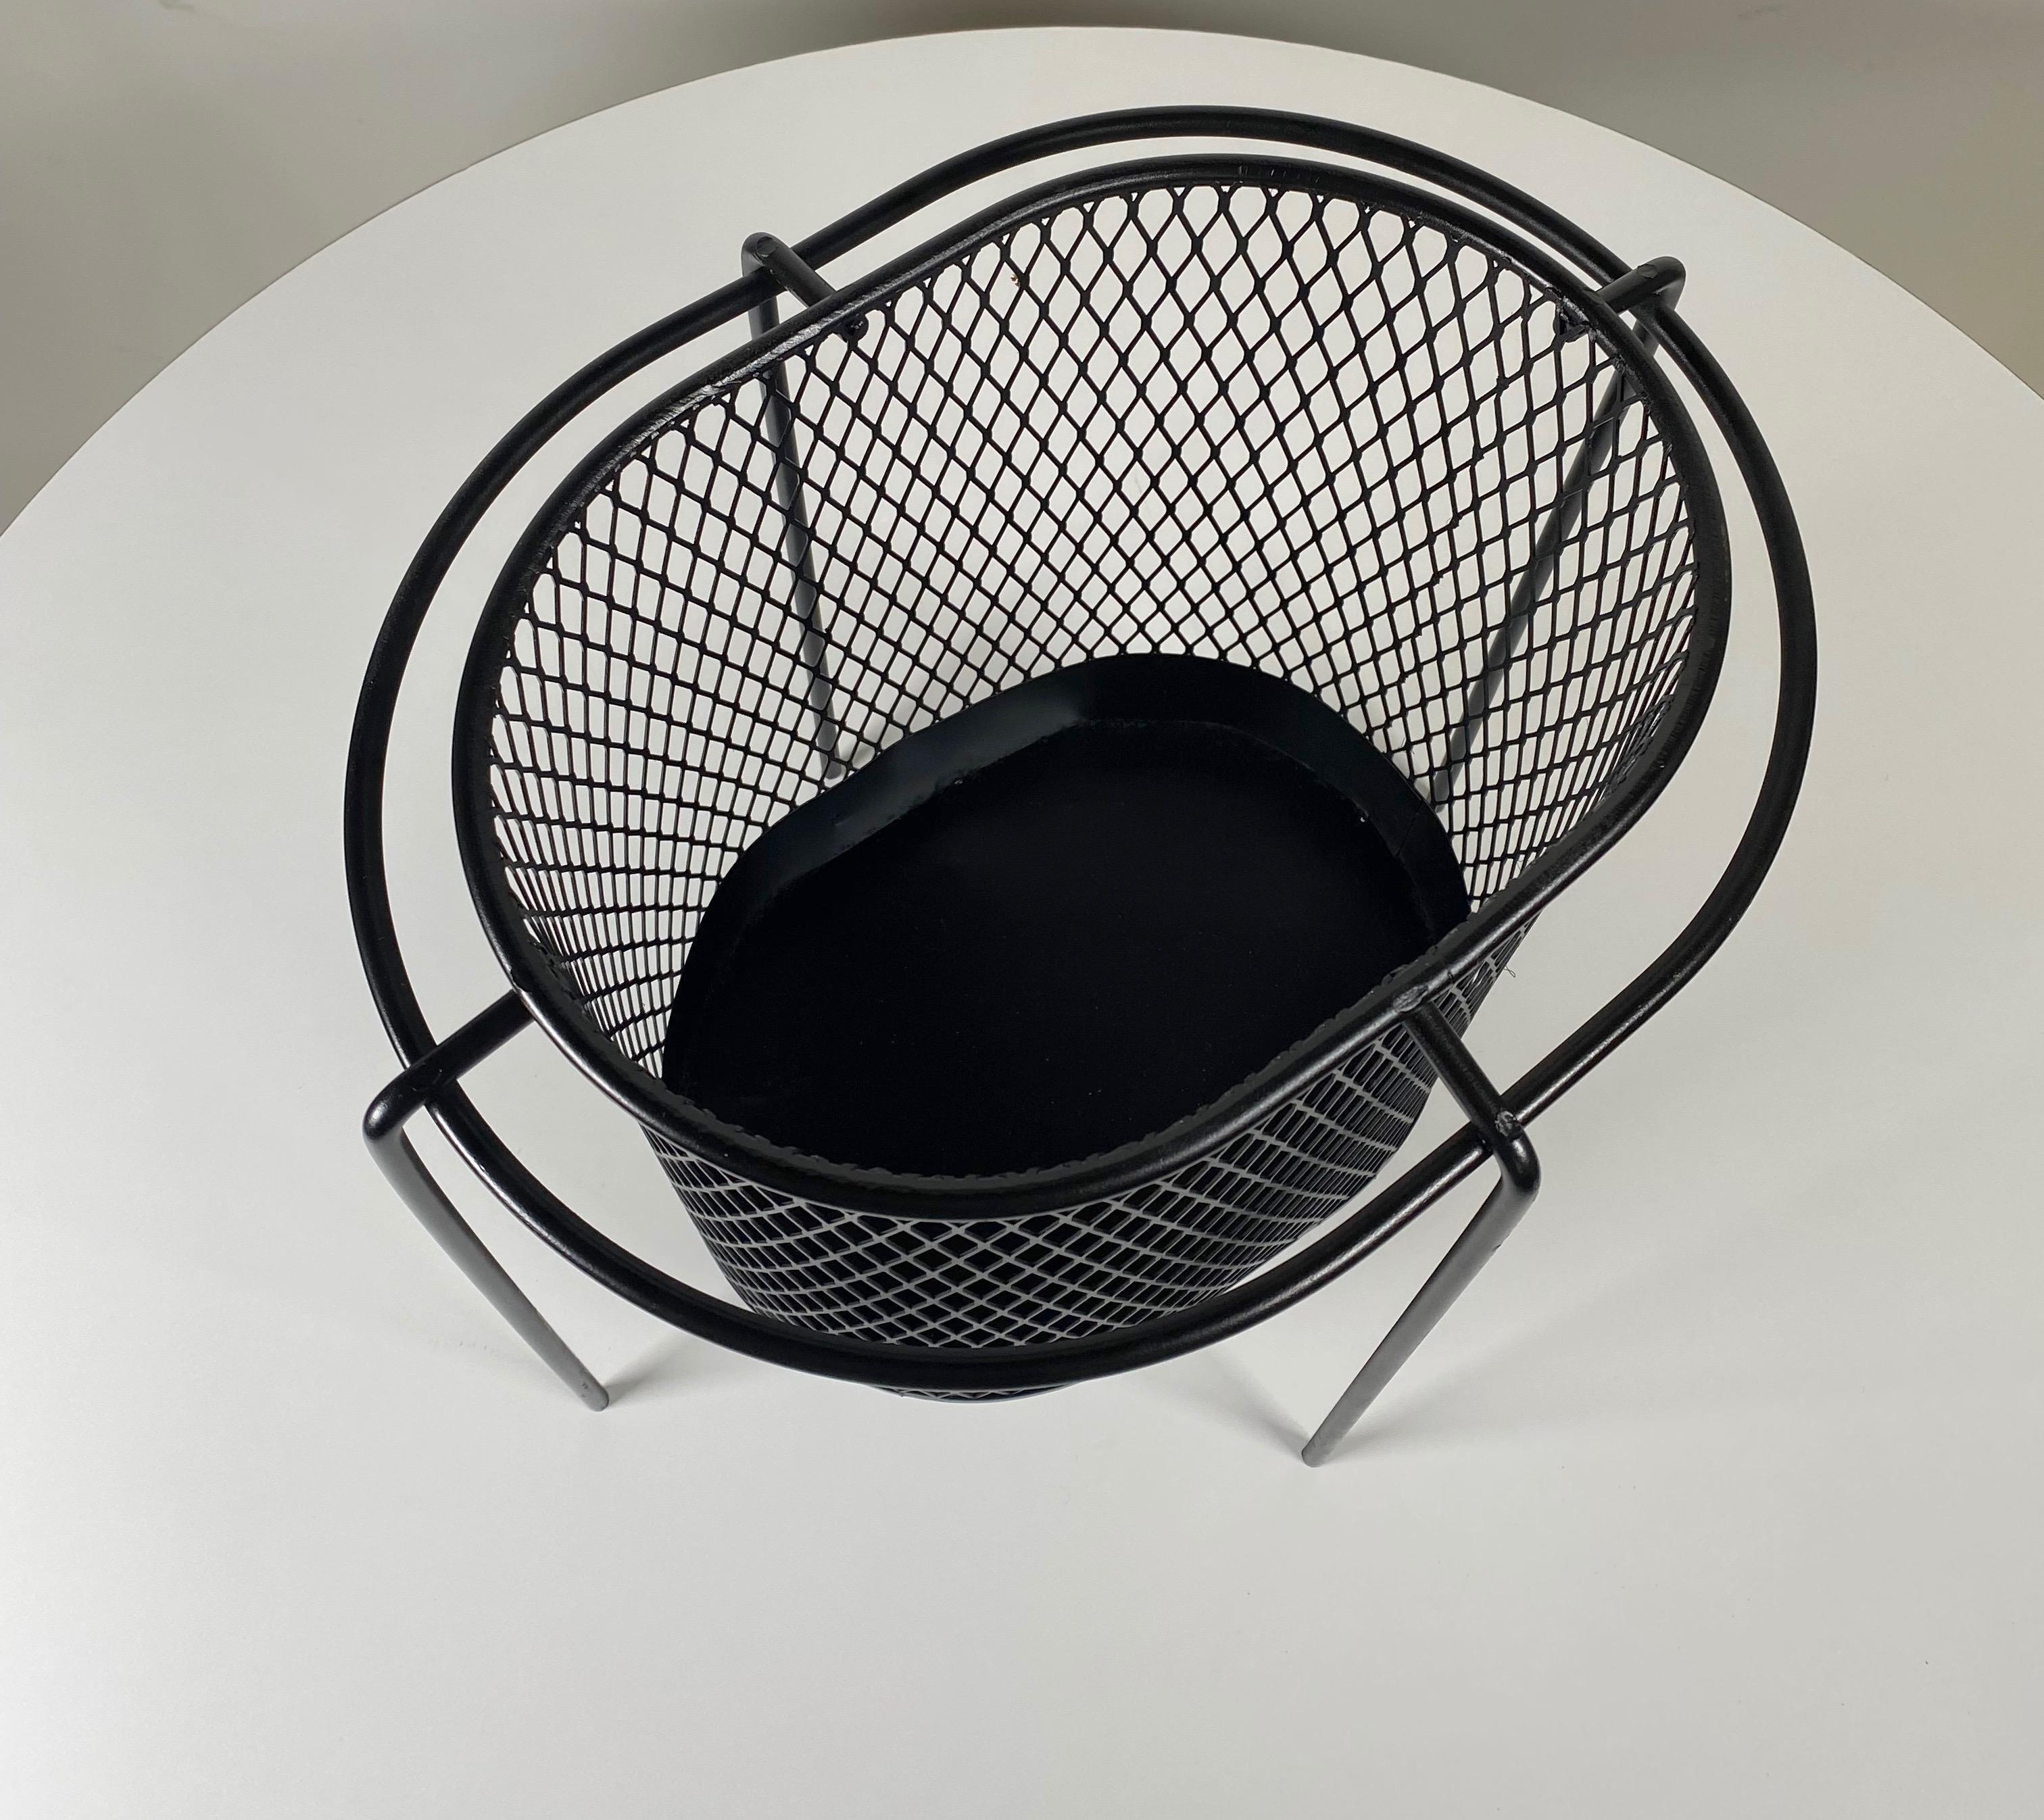 American Maurice Duchin Expanded Wastepaper Basket Modernist 1950s Design